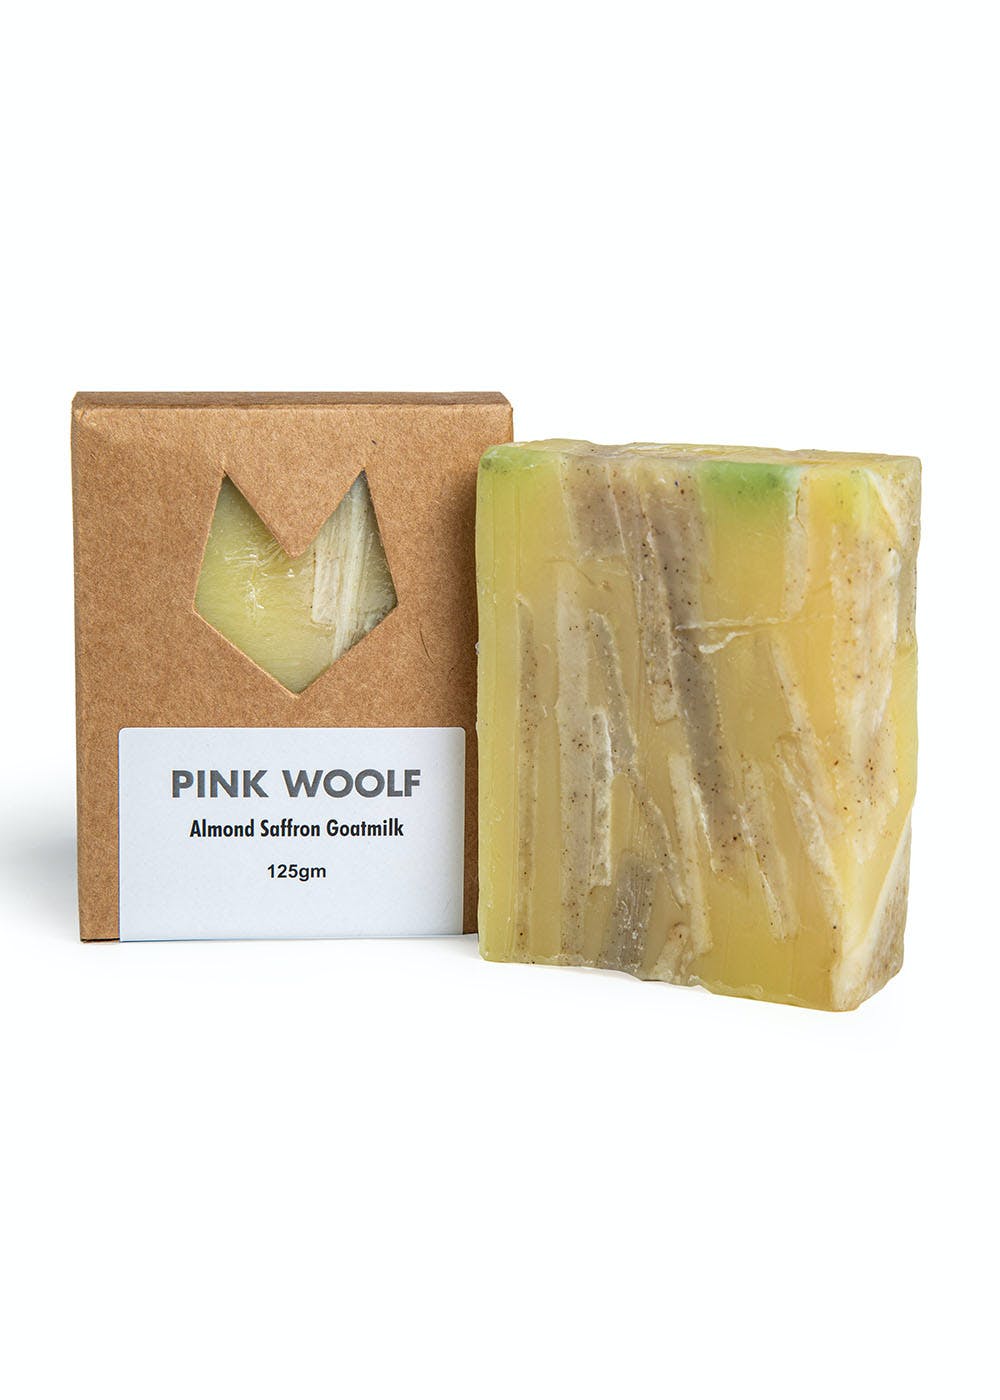 Almond, Saffron, Goatmilk Natural & Handmade Organic Bathing Soap Bar - 125gm